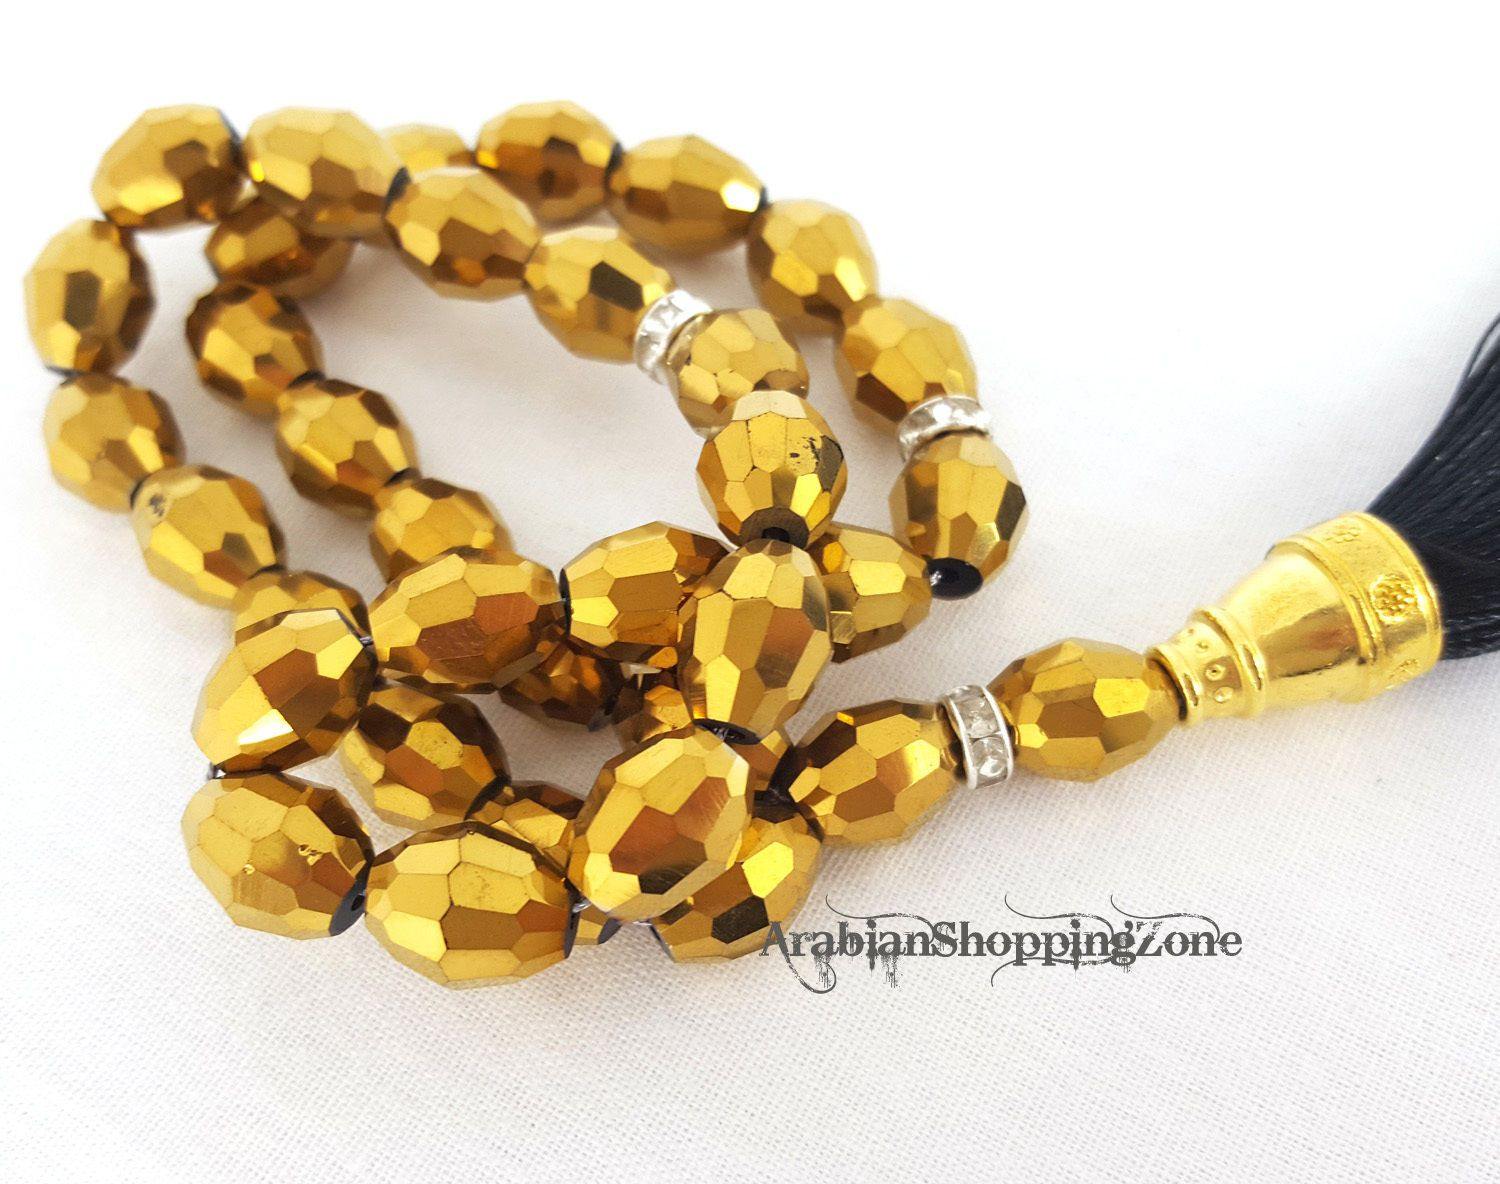 Islamic Salah 12mm Golden Crystal Prayer Beads 33 Mesbaha - Arabian Shopping Zone